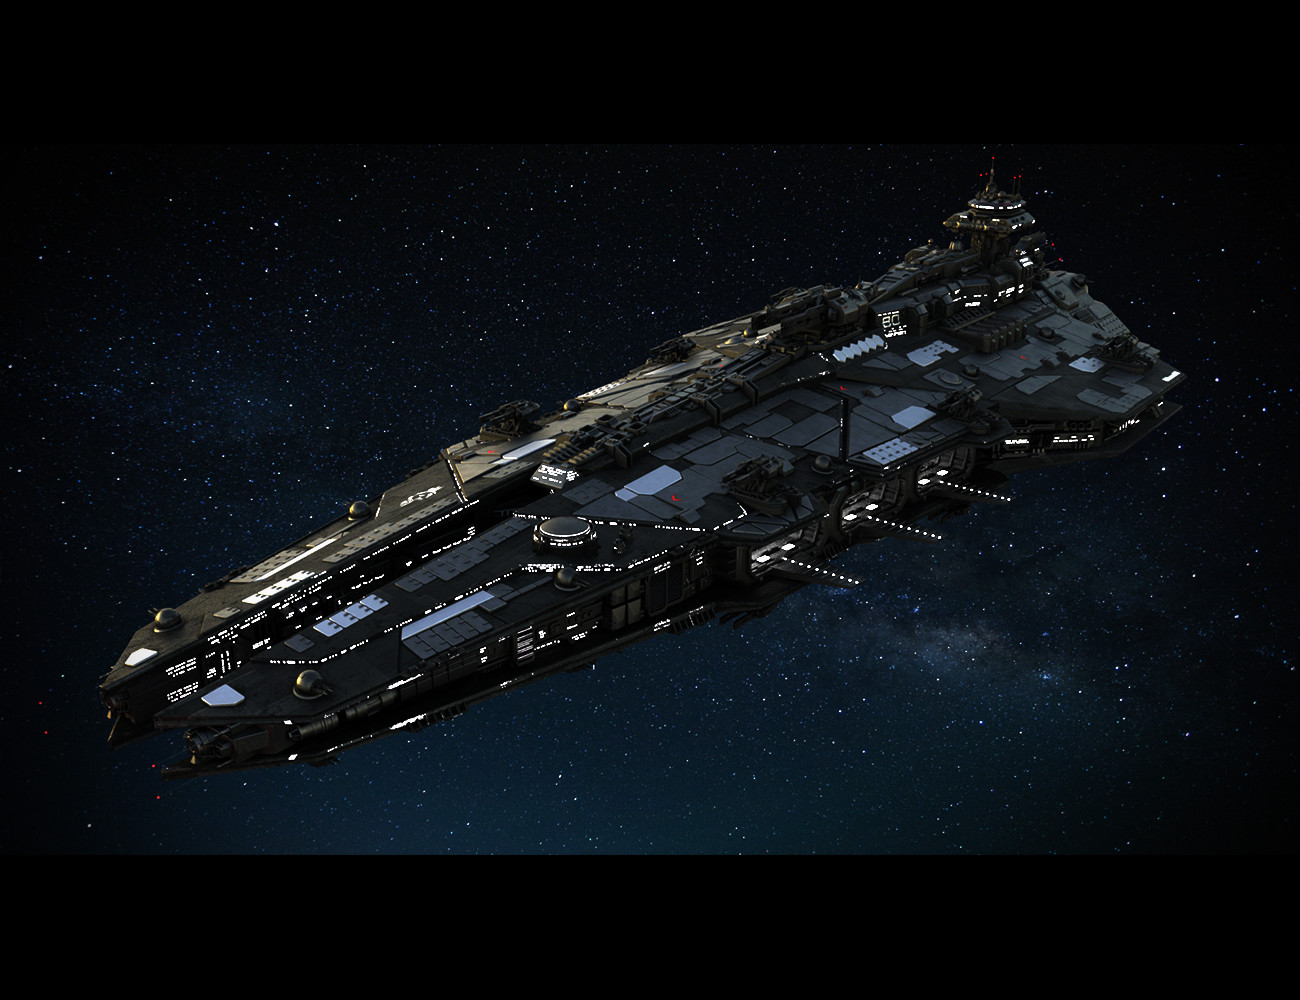 ArtStation - Space Battleship, Misuo WU  Space ship concept art, Space  battleship, Battleship